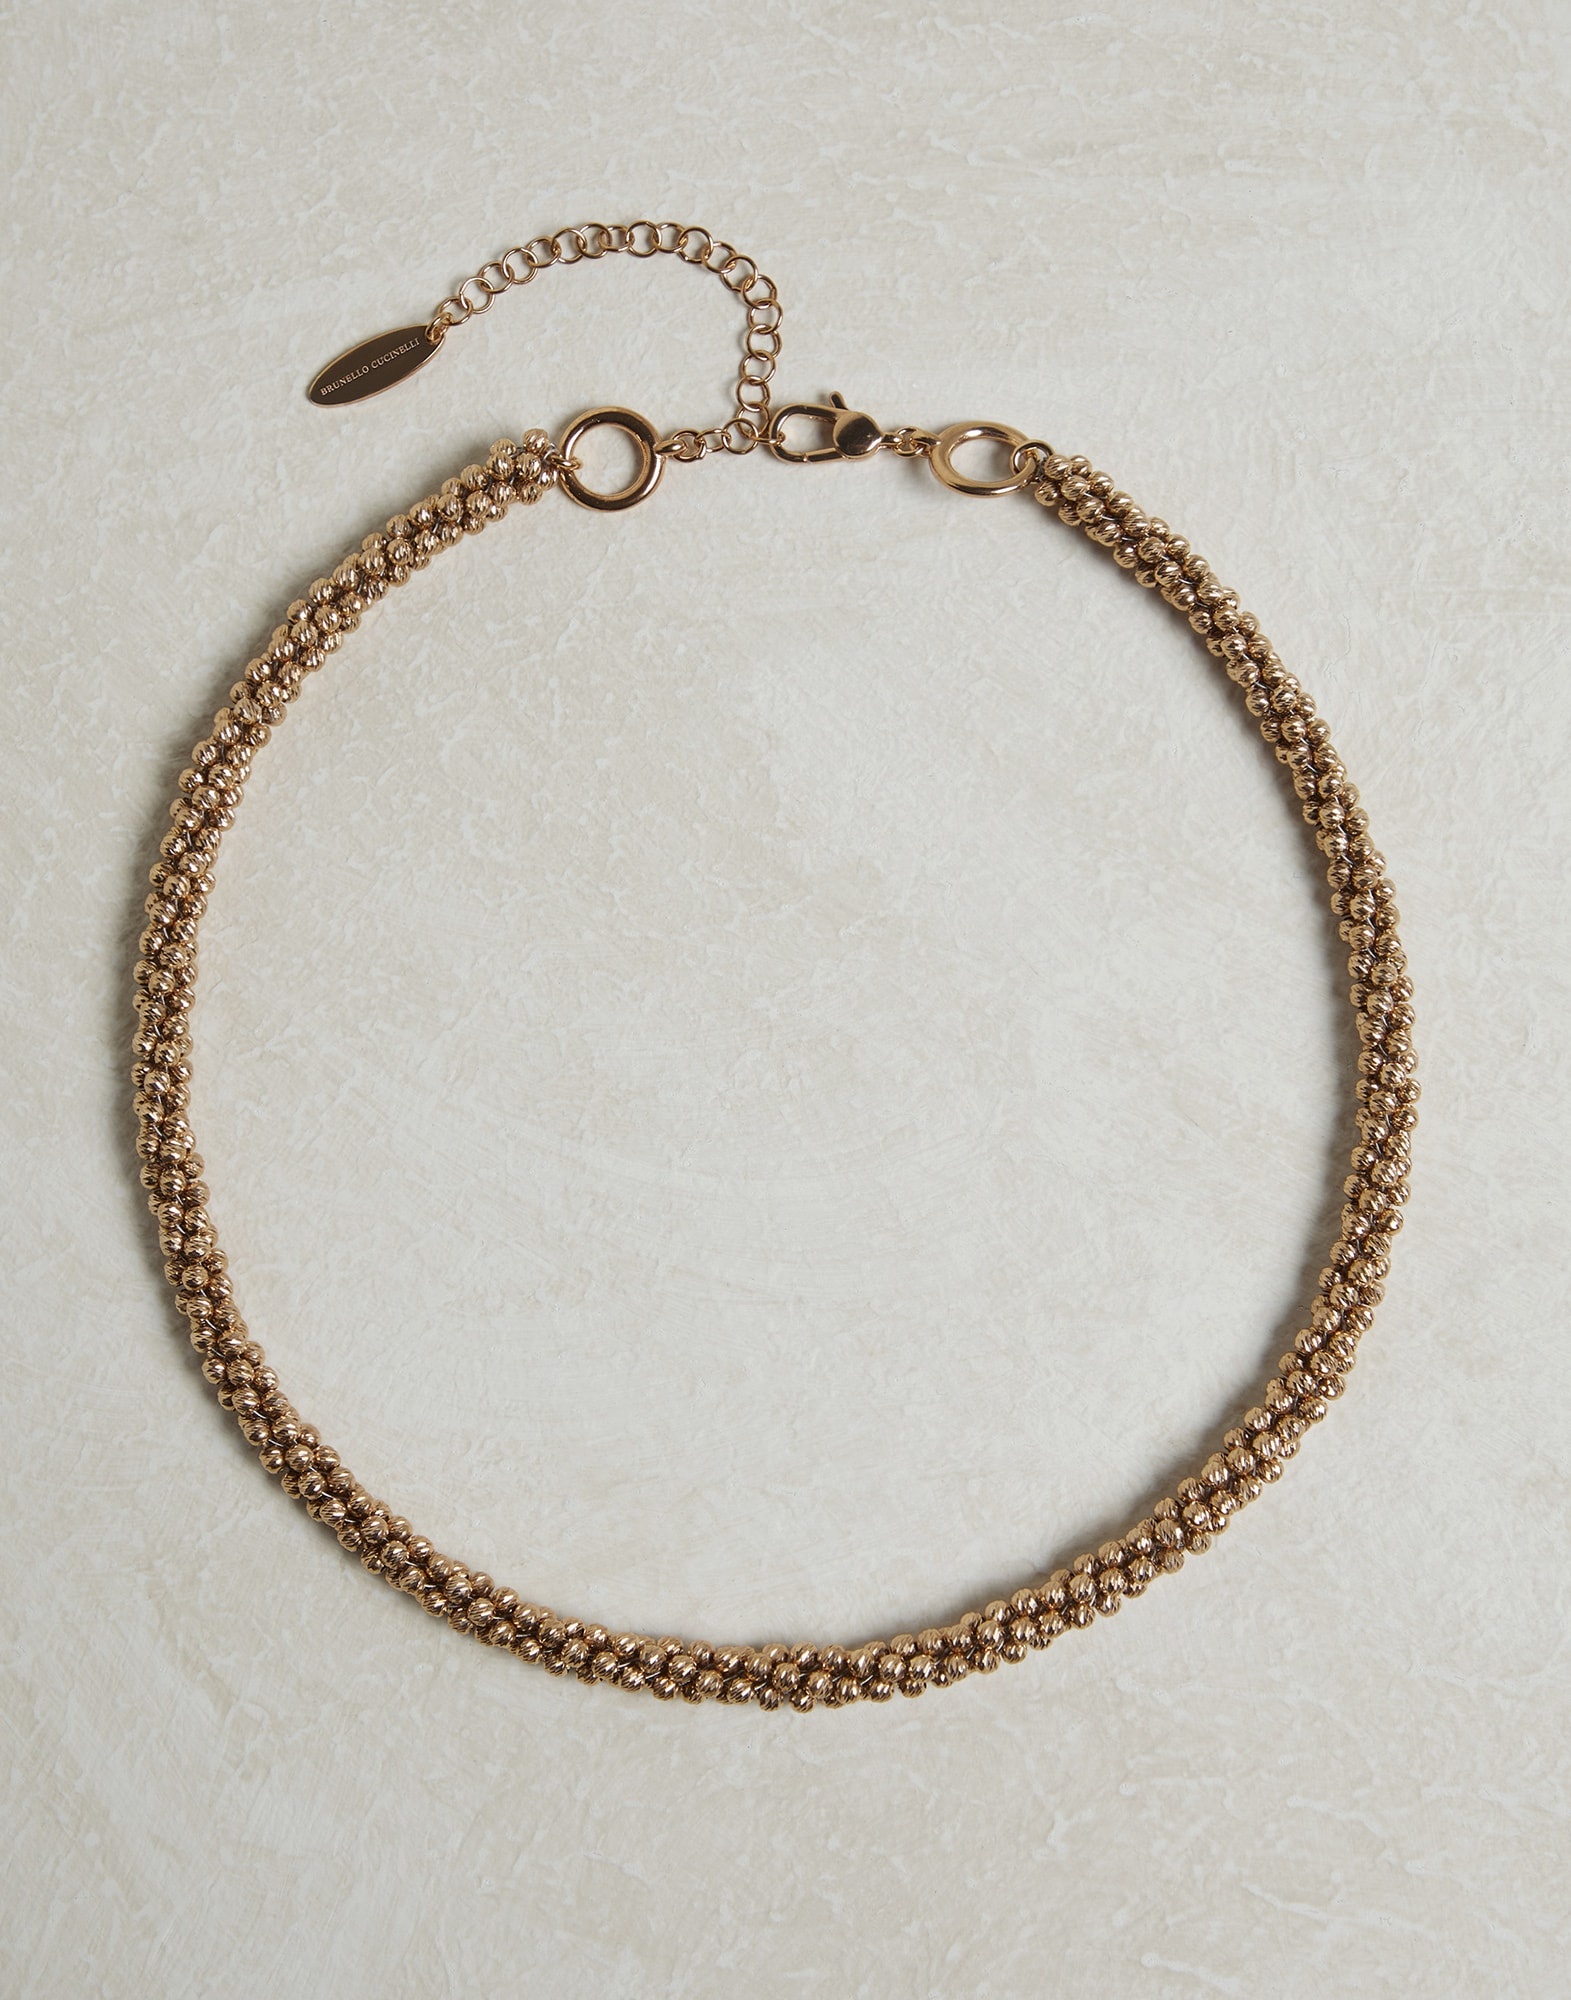 Stirling Silver twist necklace - 1